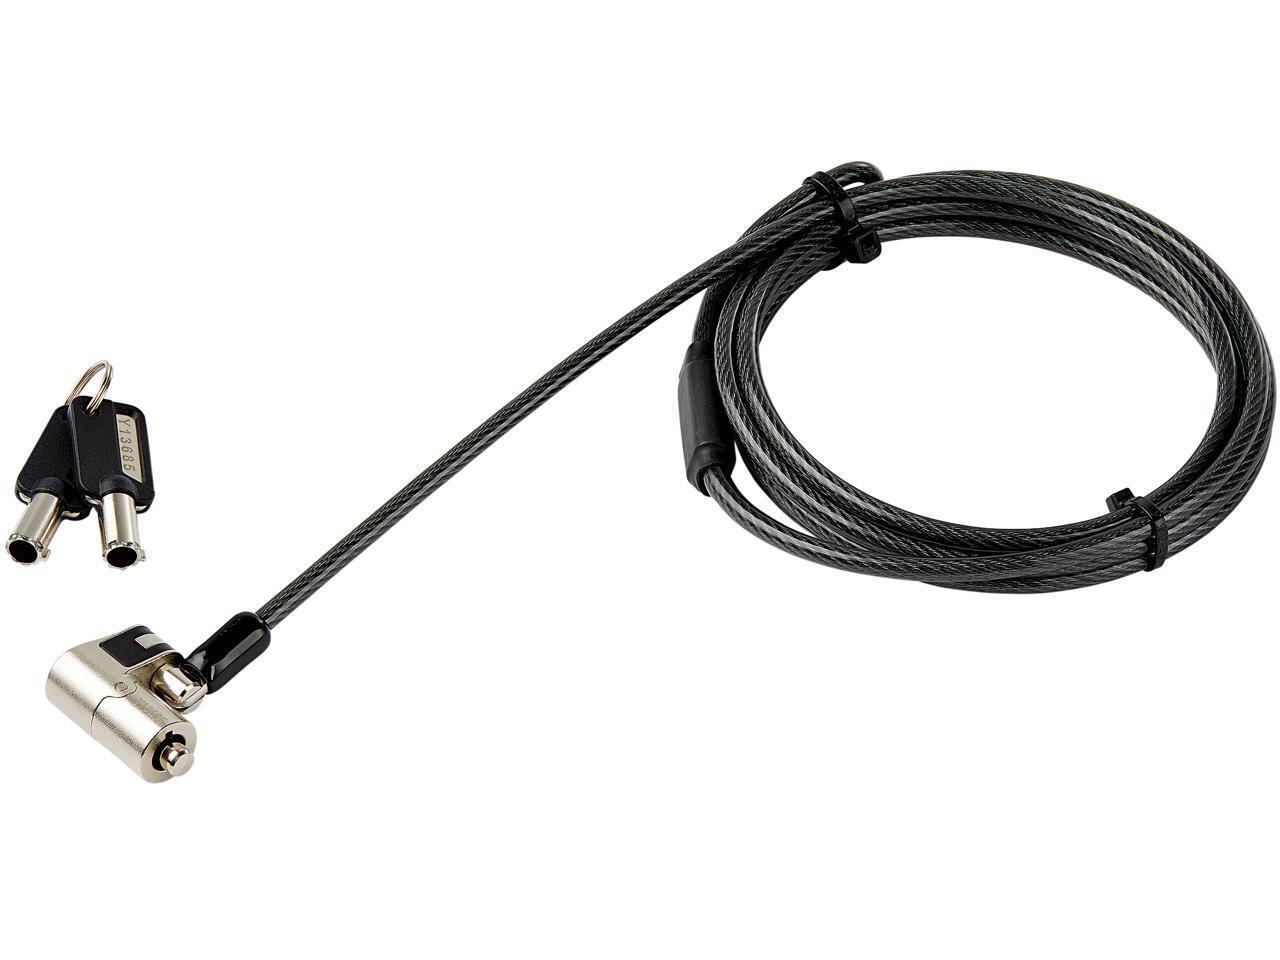 StarTech.com LTULOCKKEY 6' (2m) 3-in-1 Universal Laptop Cable Lock - Keyed